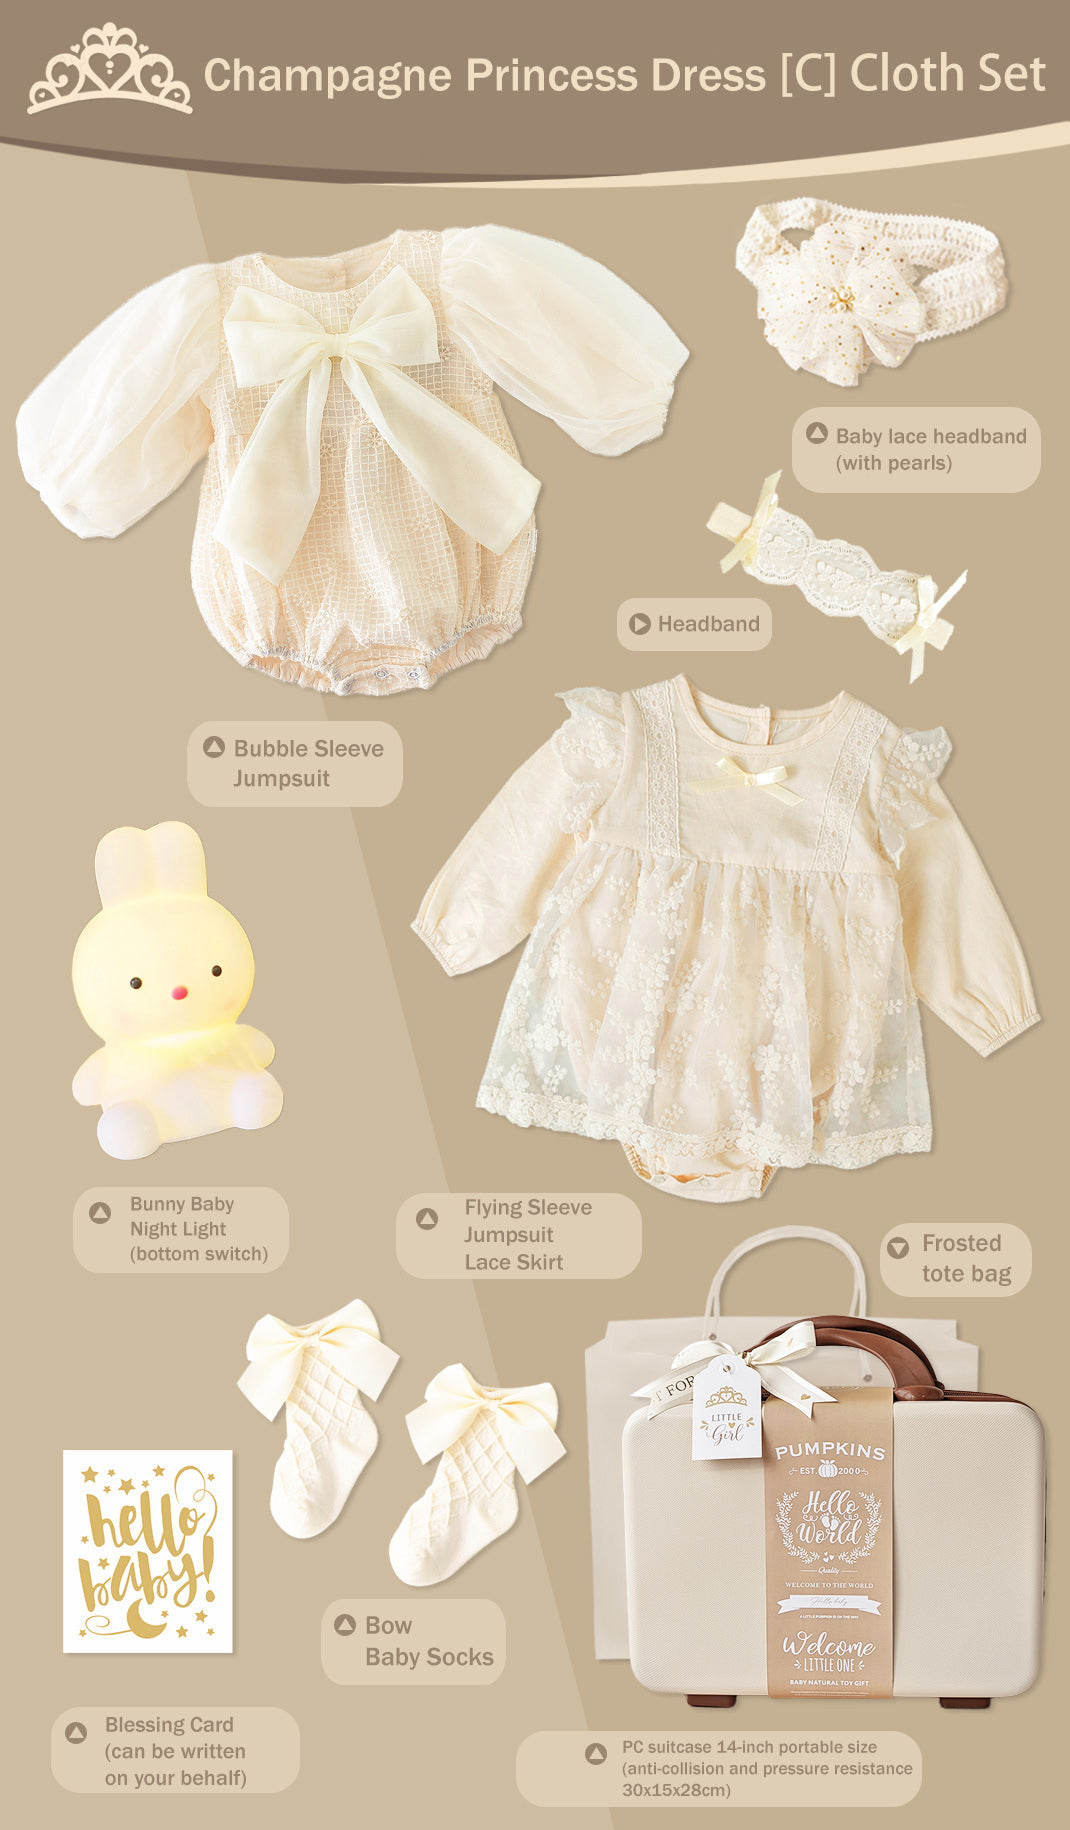 Champagne Princess Dress Newborn Gift Box 0-18M Baby Cloth Set